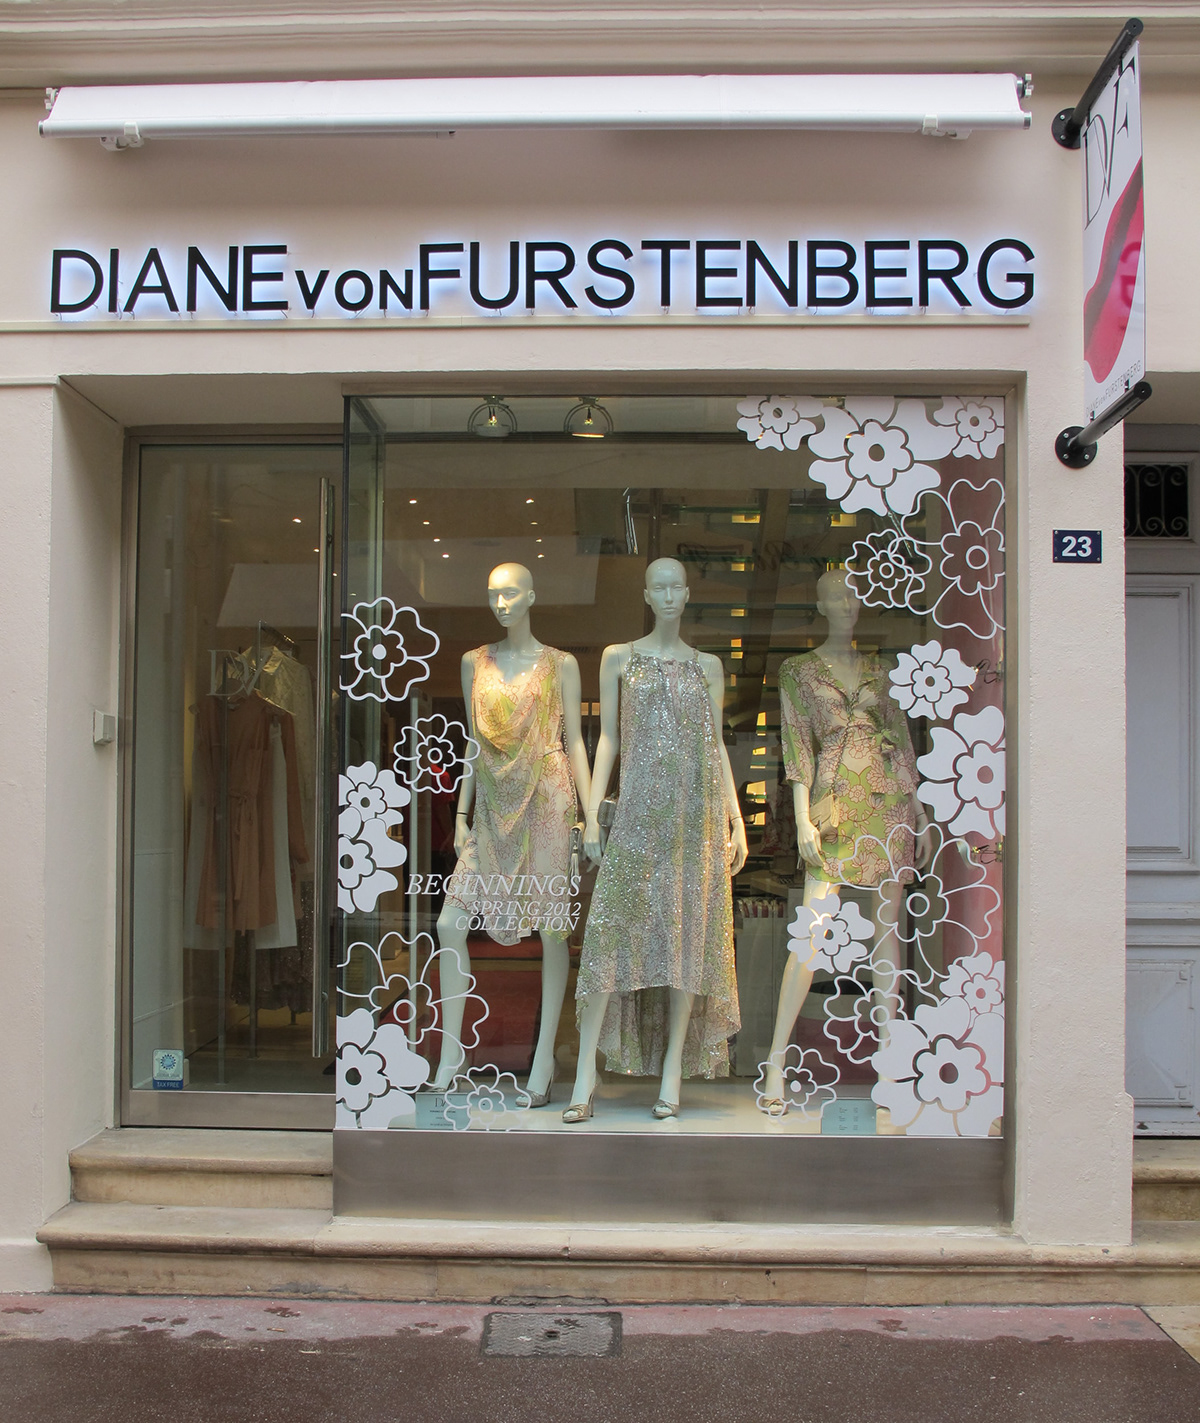 DVF boutique design Diane von furtsenberg zwilling-id zwilling interior design jean fotzler nicolas poirirer cecile de cambourg sebastien naulleau zwilling Saint Tropez emmanuel rubbens rubbens design